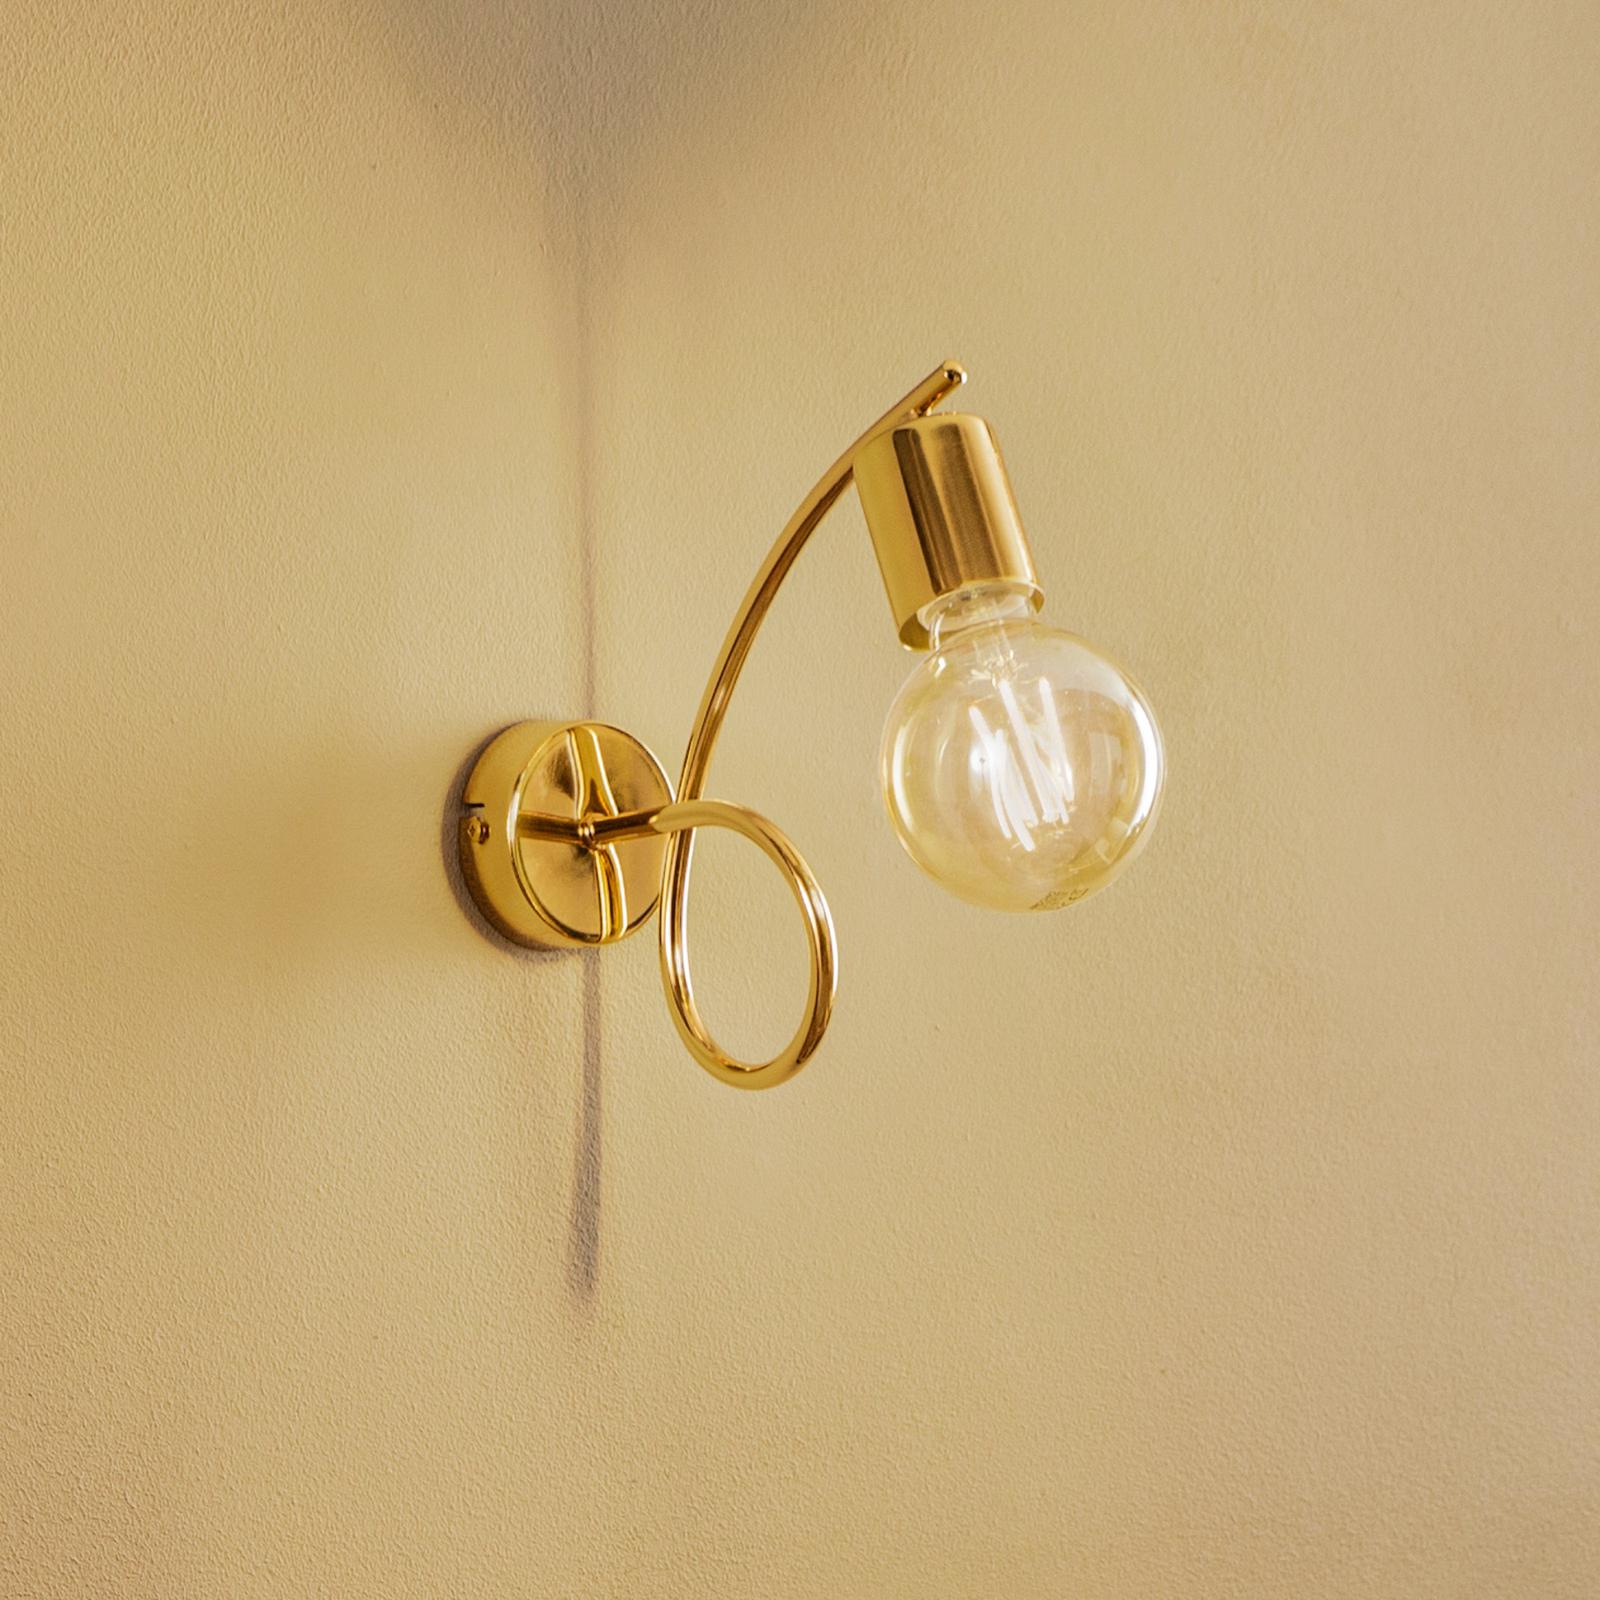 Tango wall light, gold-coloured